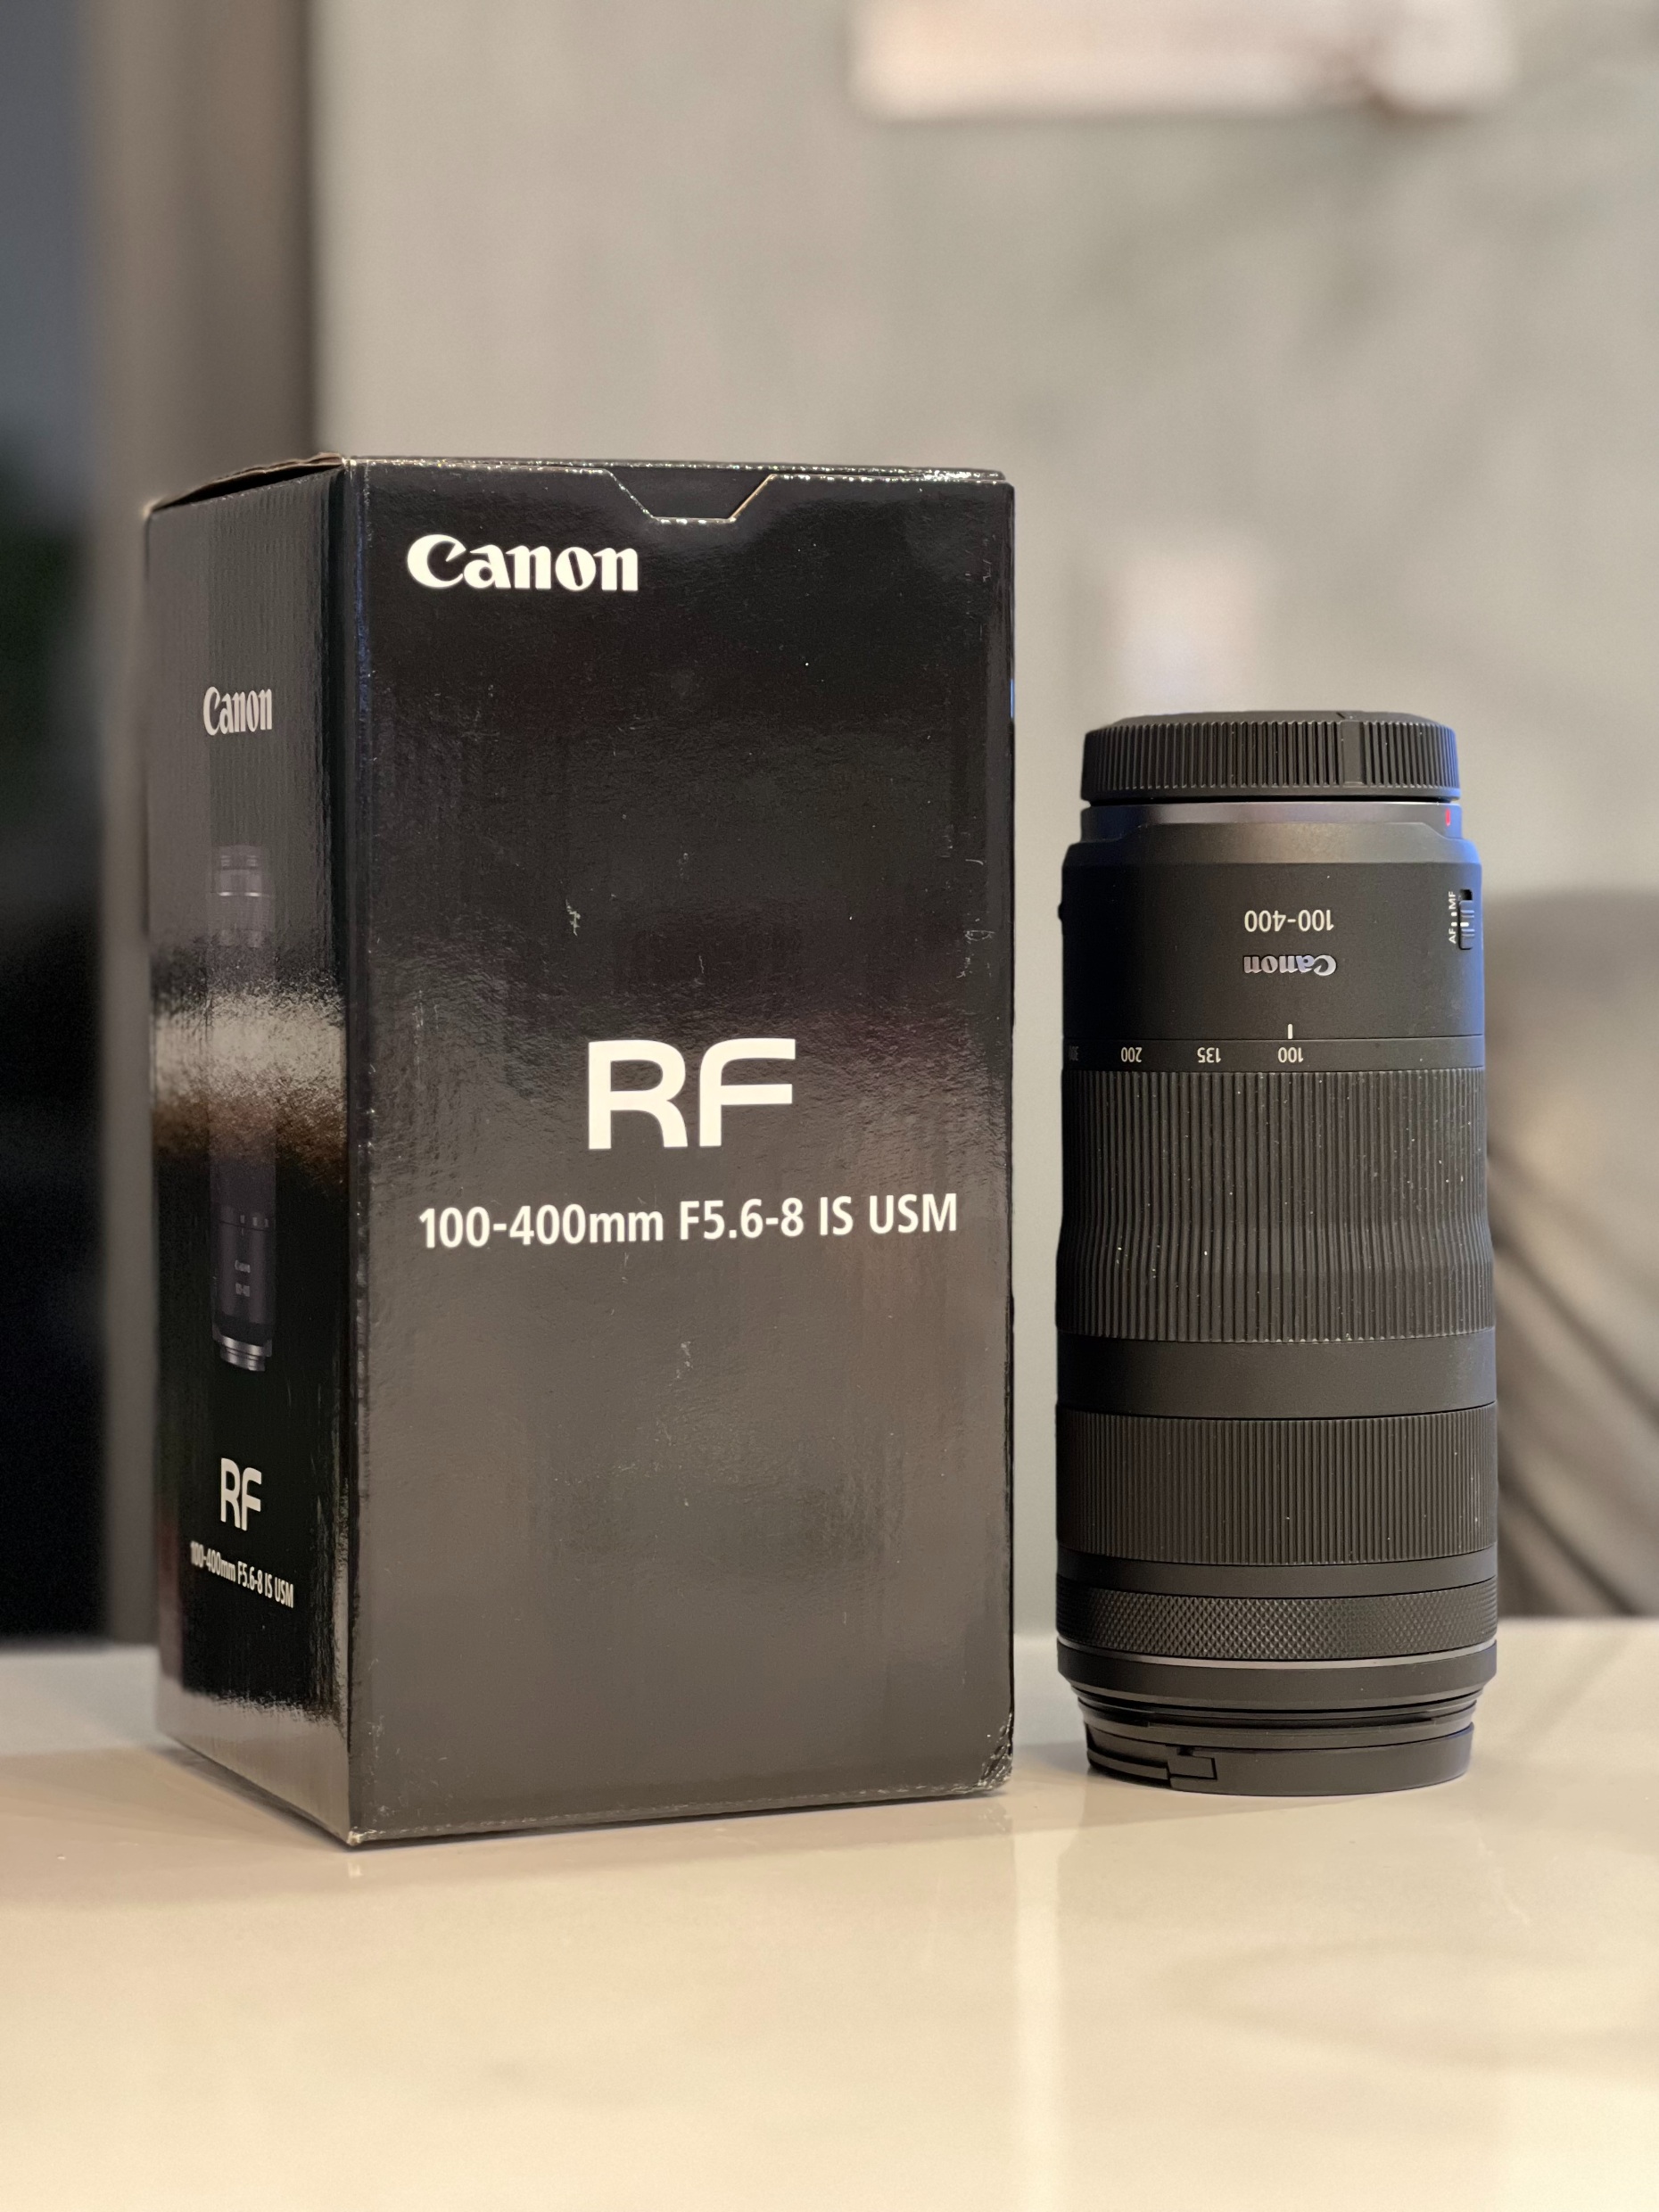 F5.6-8 IS EOS R Canon RF 100-400mm EOS R - - USM Canon Forum Gebrauchtmarkt Canon